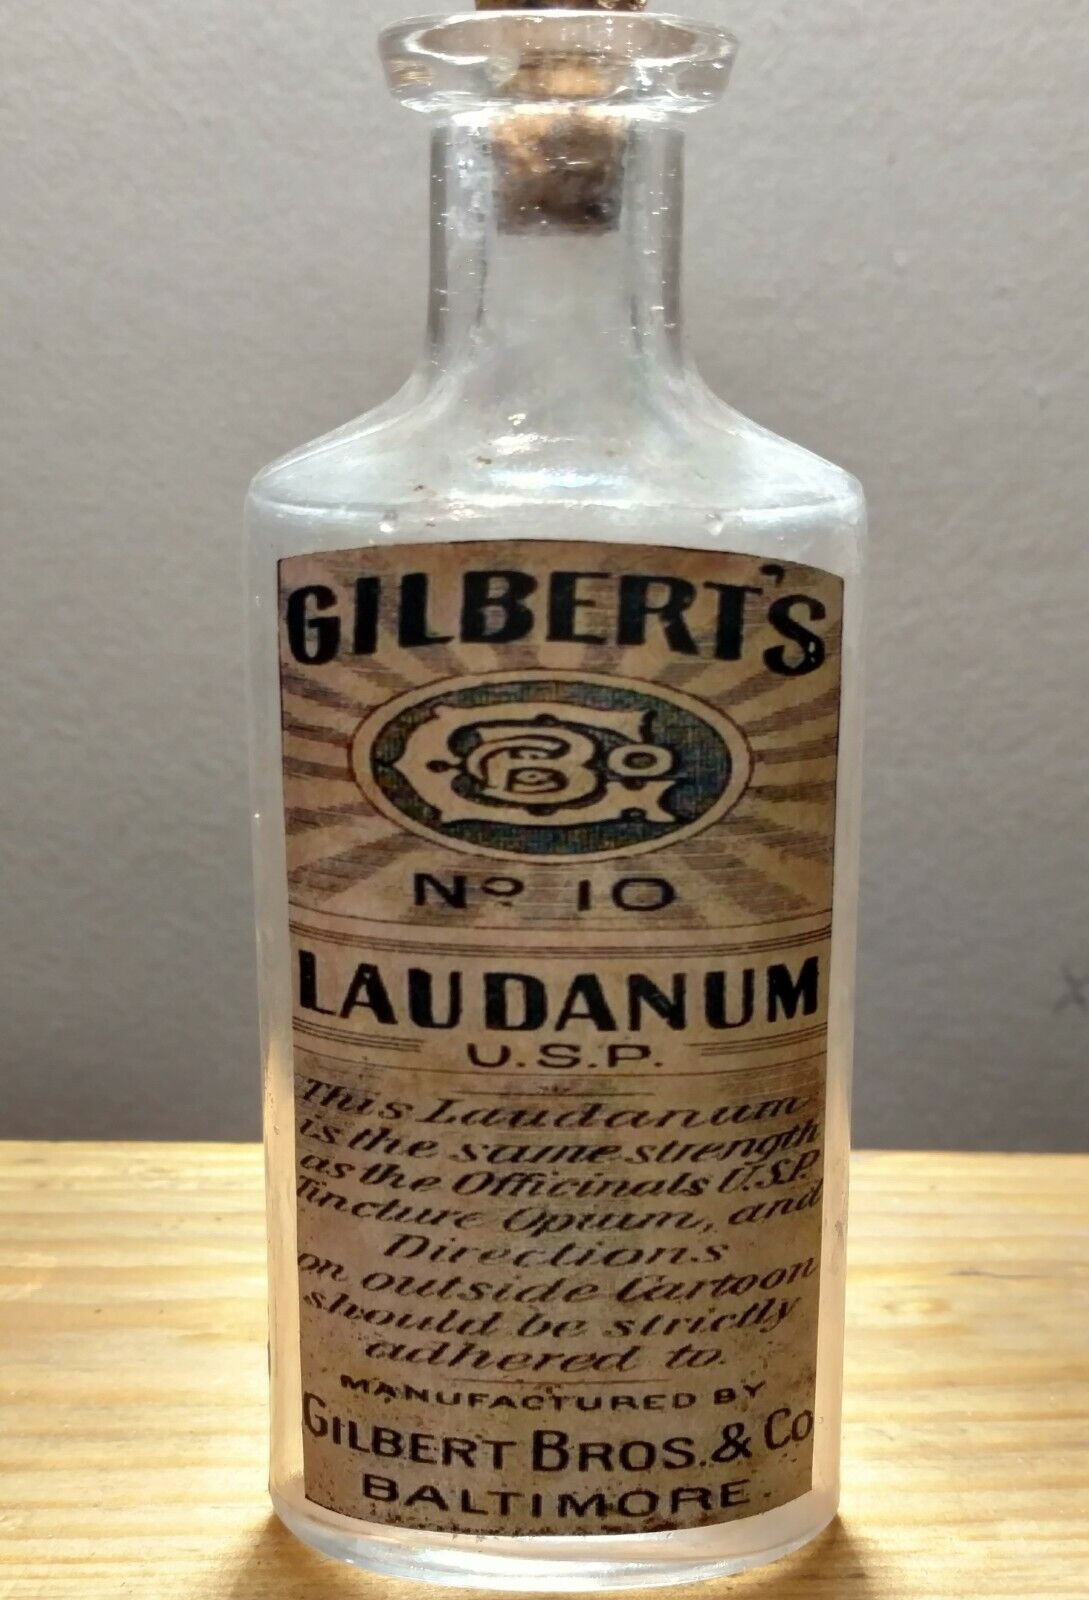 Vintage Medicine Hand Crafted Bottle, Gilbert Bros Laudanum with Opium, NO. 10